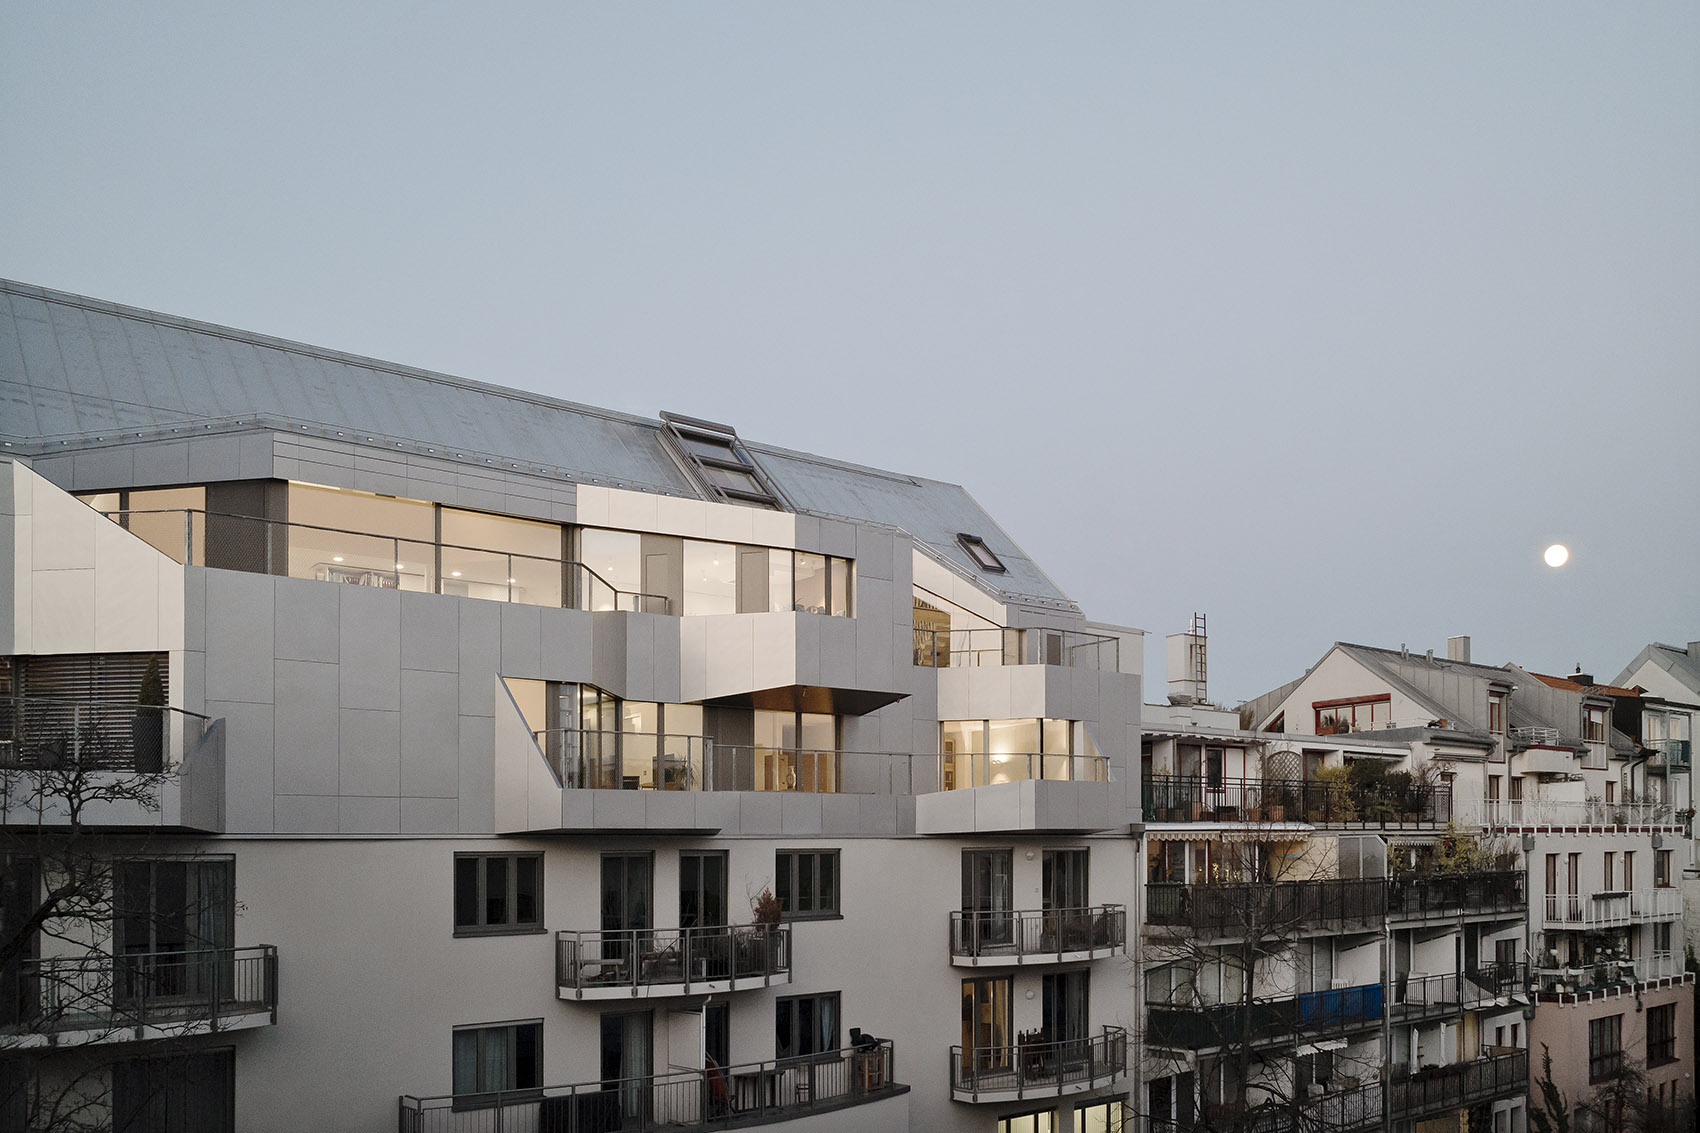 001-r11-roof-extension-maxvorstadt-by-pool-leber-architekten.jpg